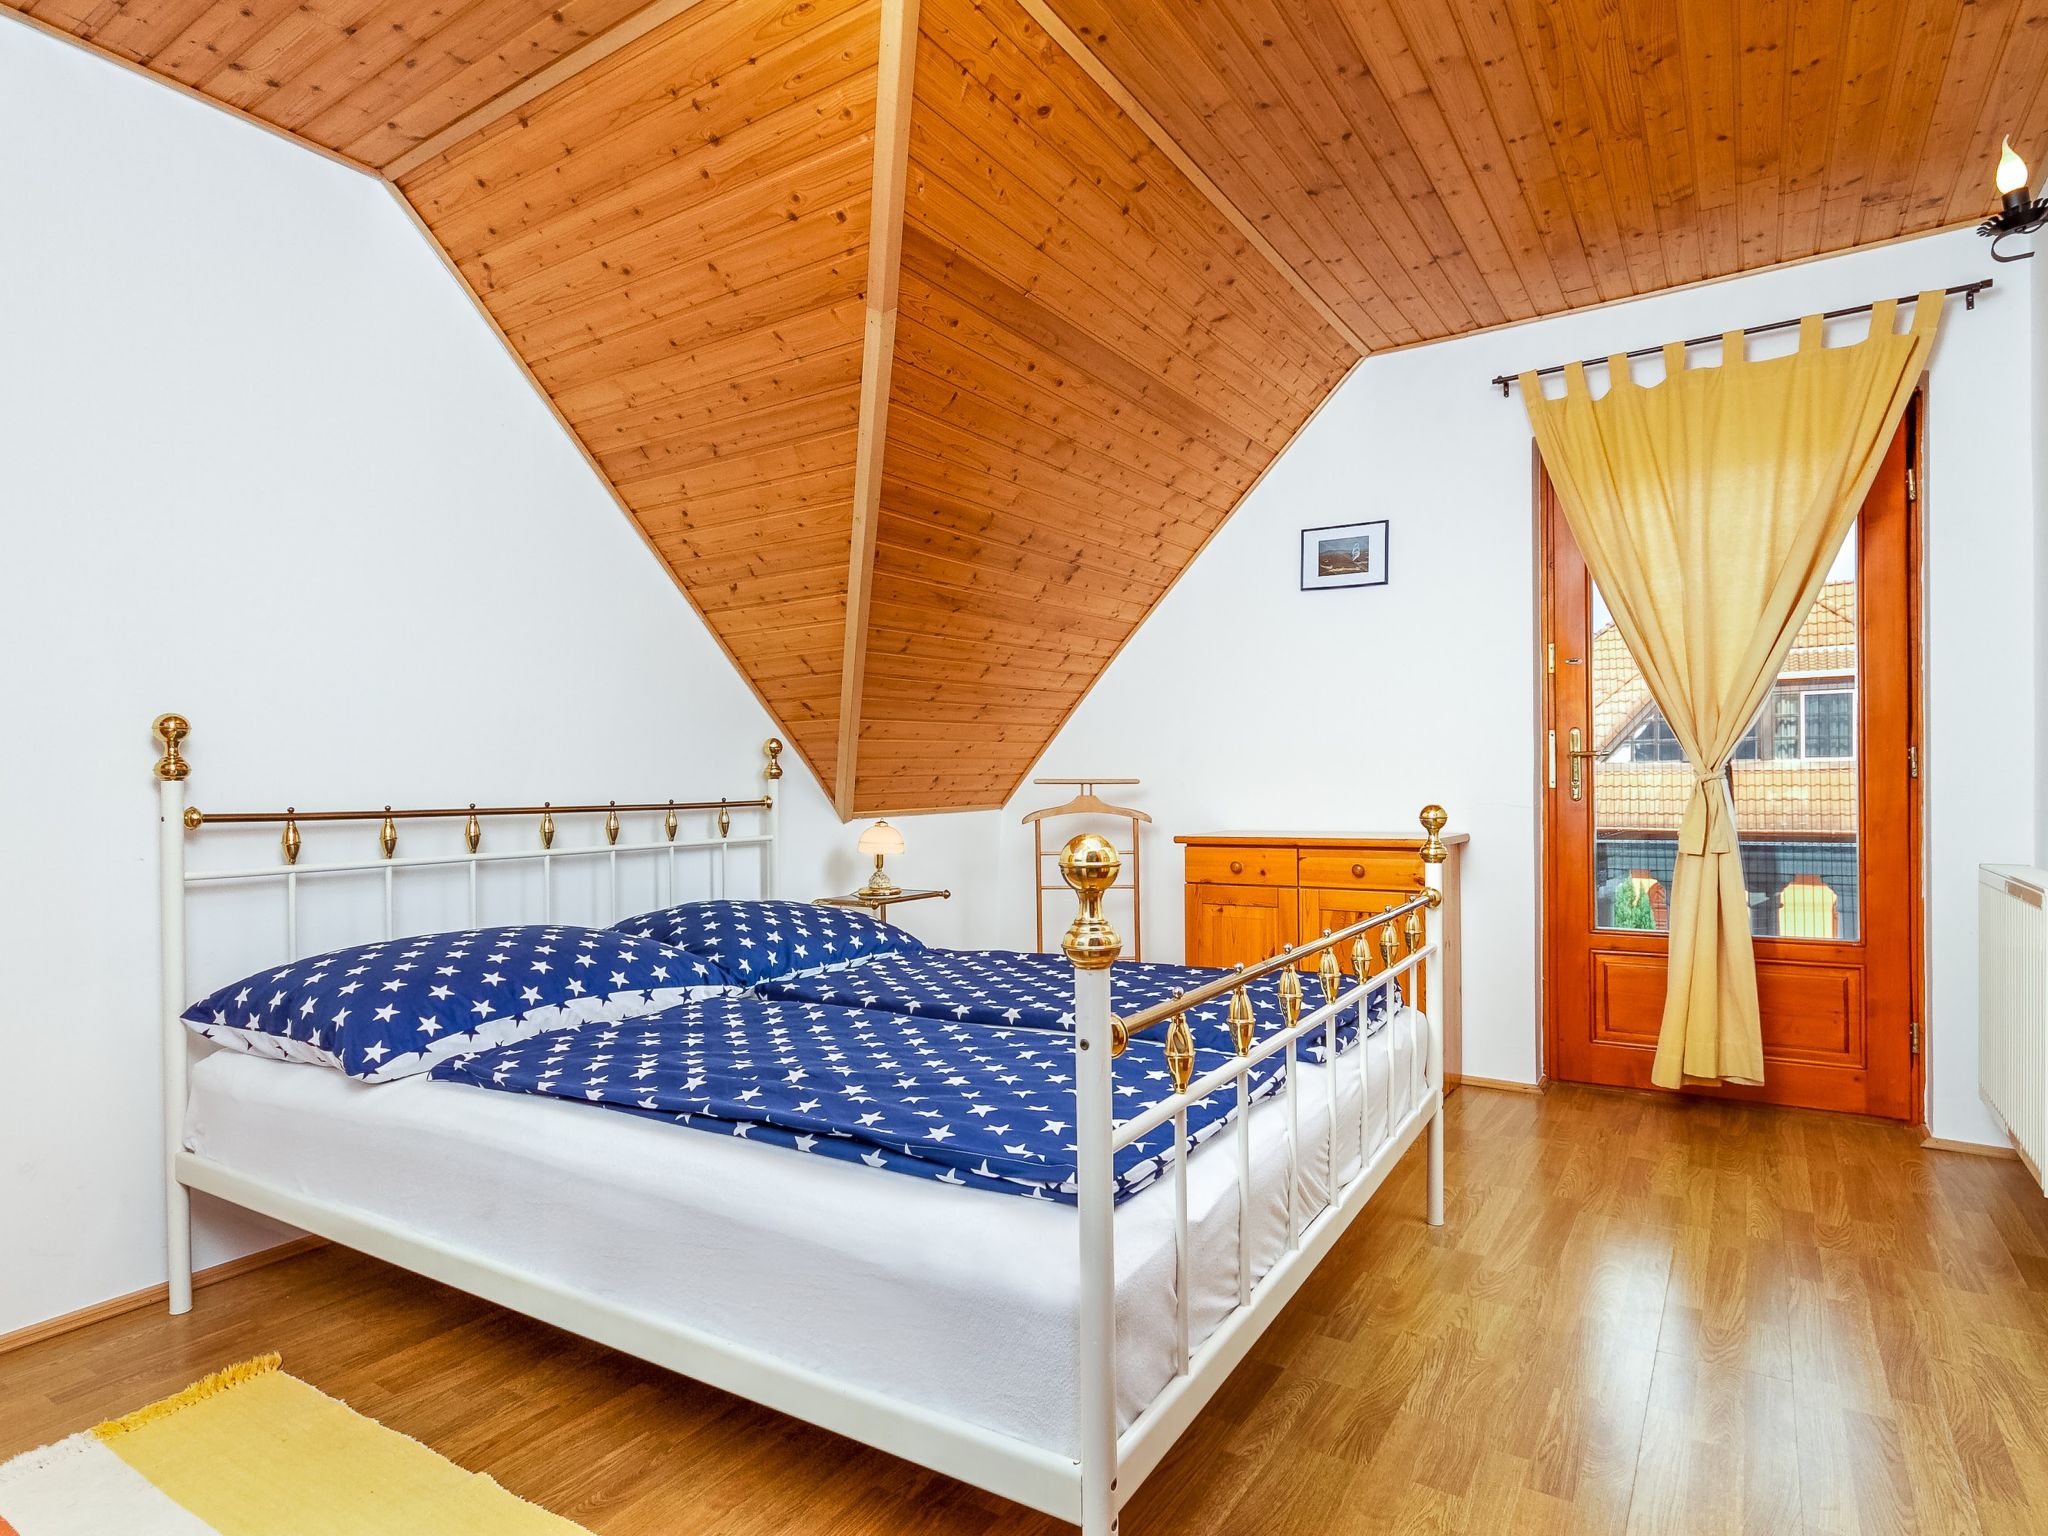 Foto 9 - Casa con 4 camere da letto a Balatonberény con piscina privata e giardino